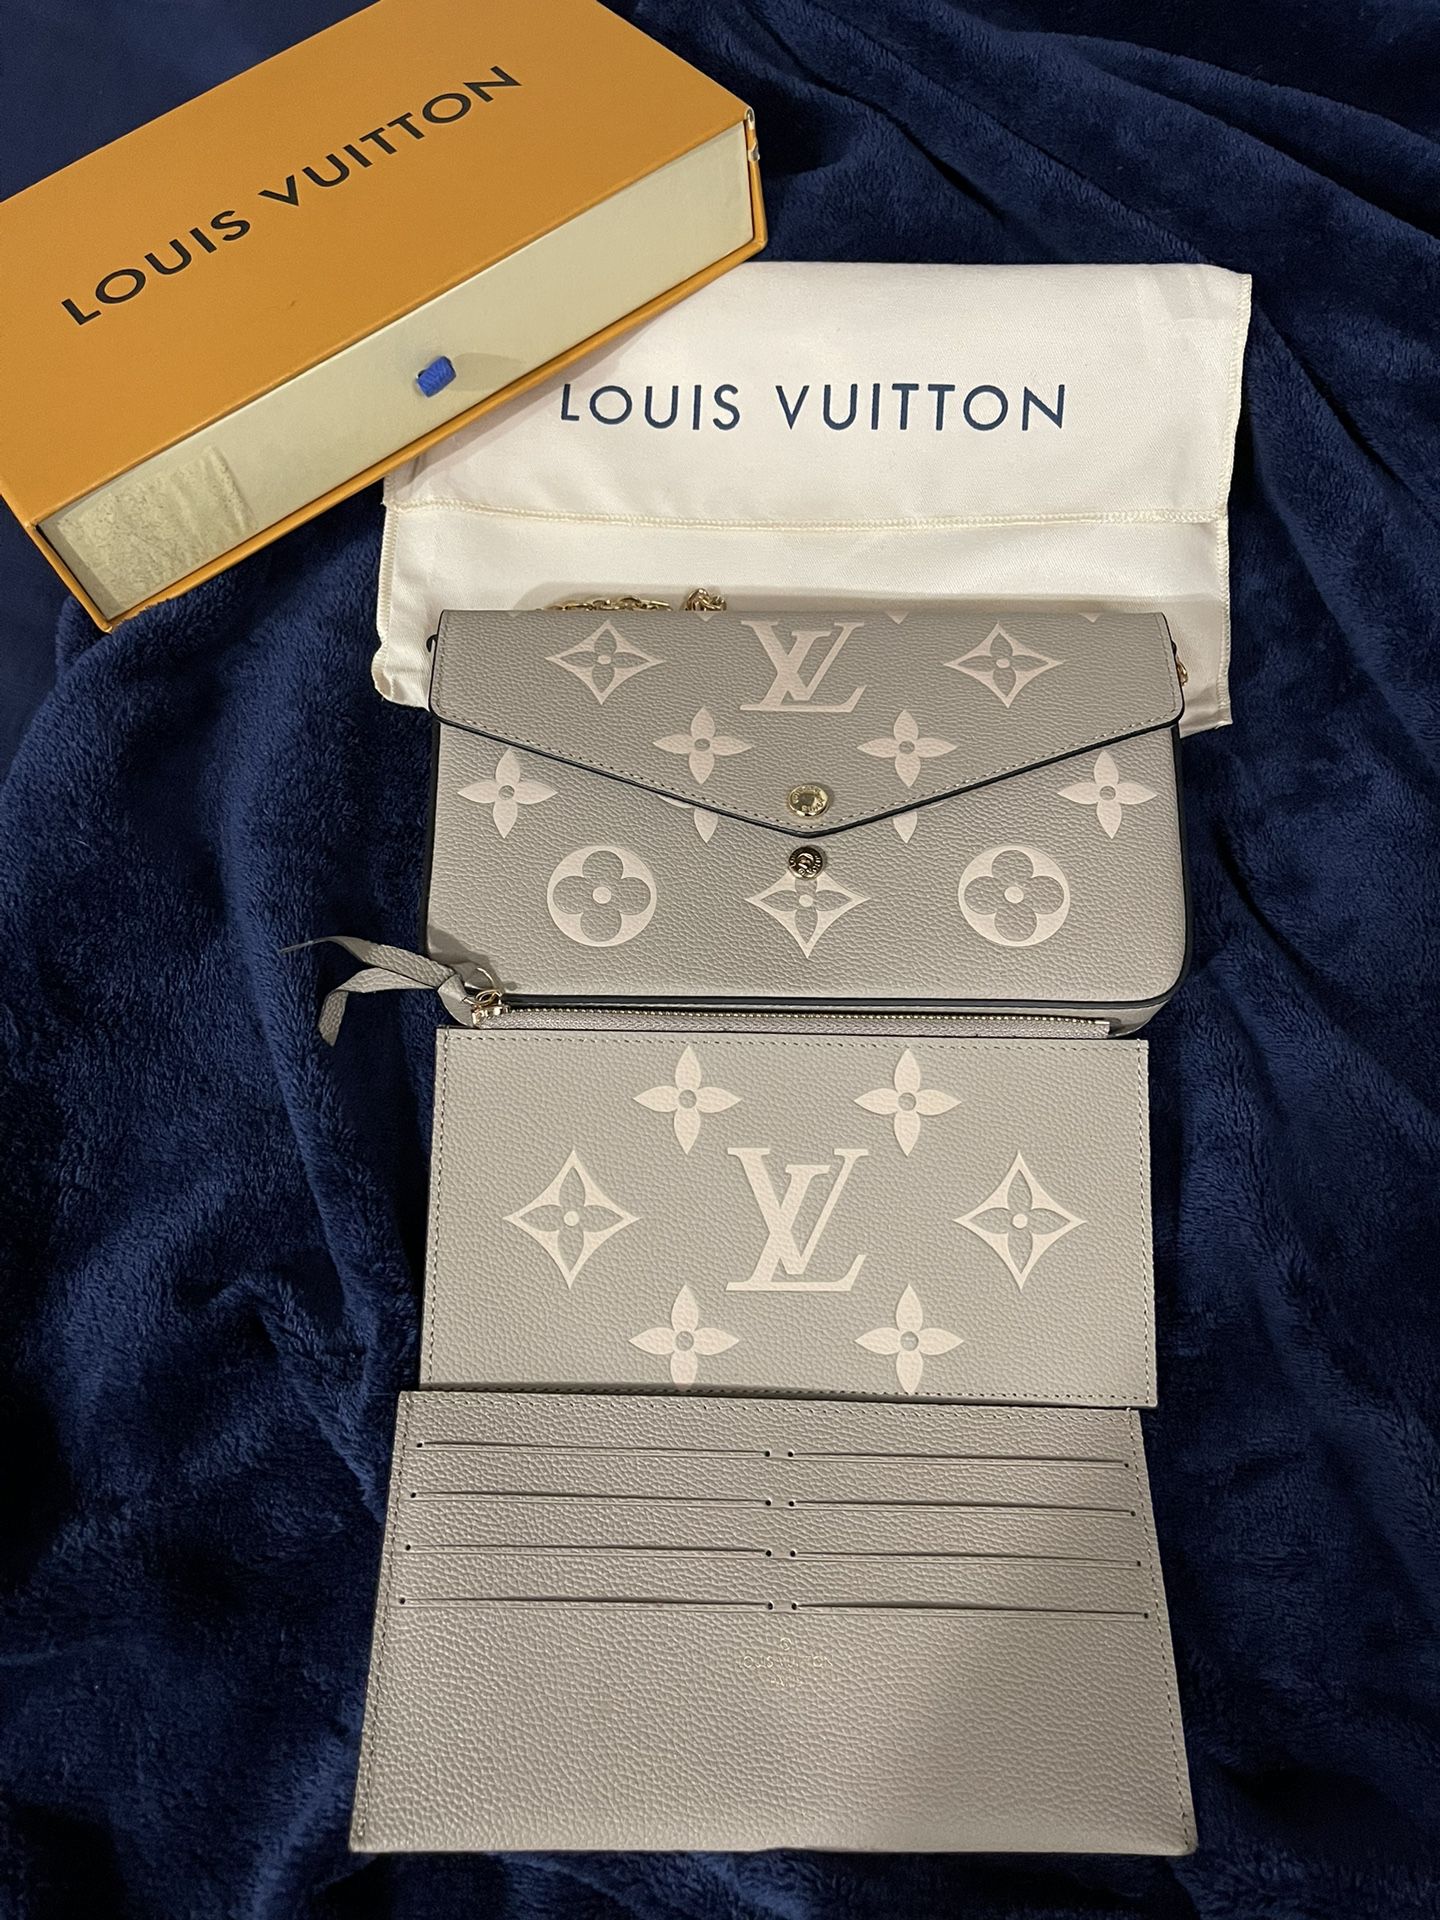 Authentic Felicie Pochette Louis Vuitton for Sale in Humble, TX - OfferUp